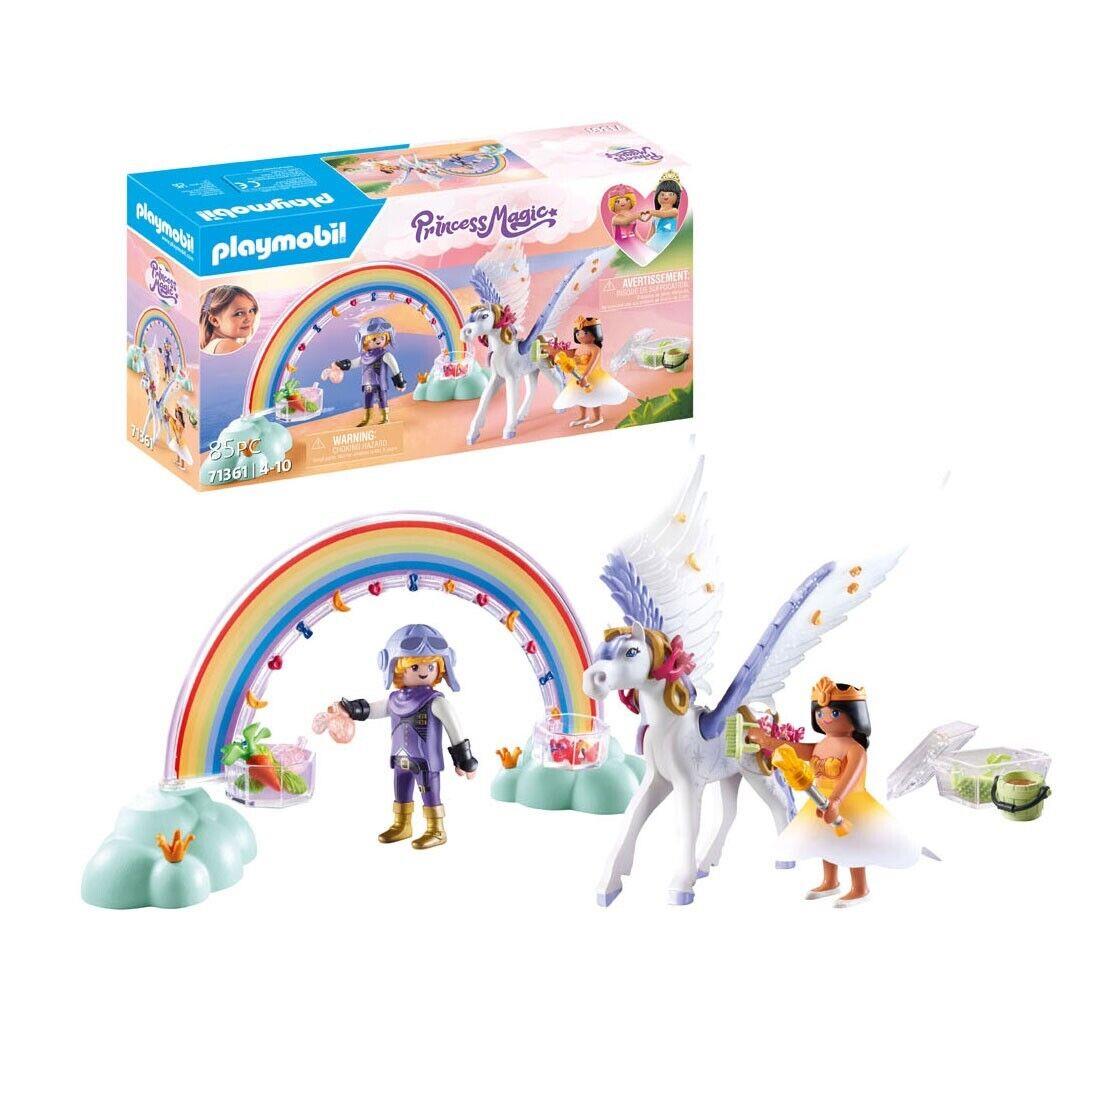 Playmobil Princess Magic 71361 Pegasus with Rainbow in The Clouds Mib/new